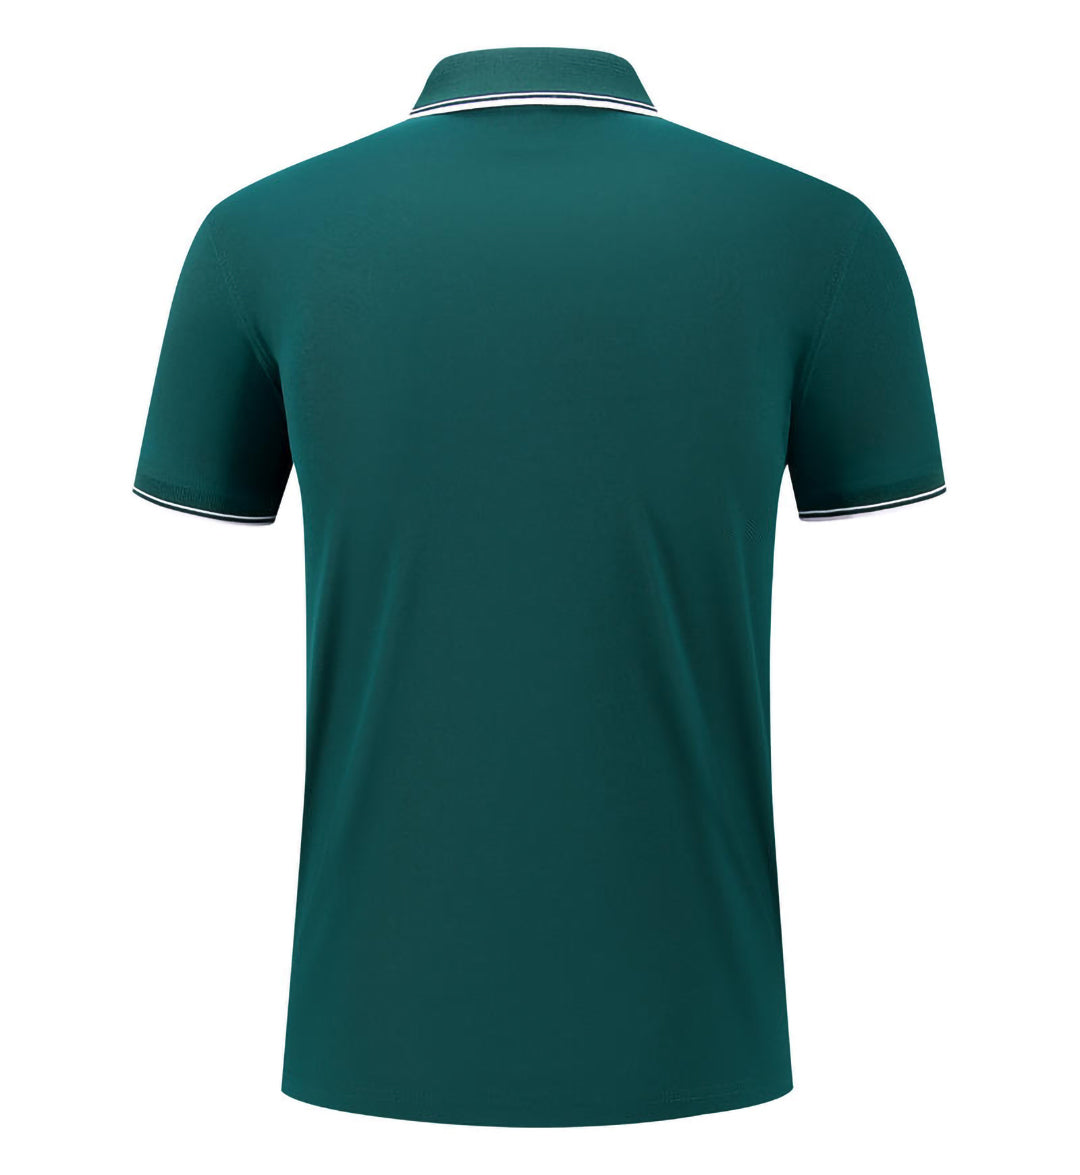 Men's contrasting sideline polo shirt